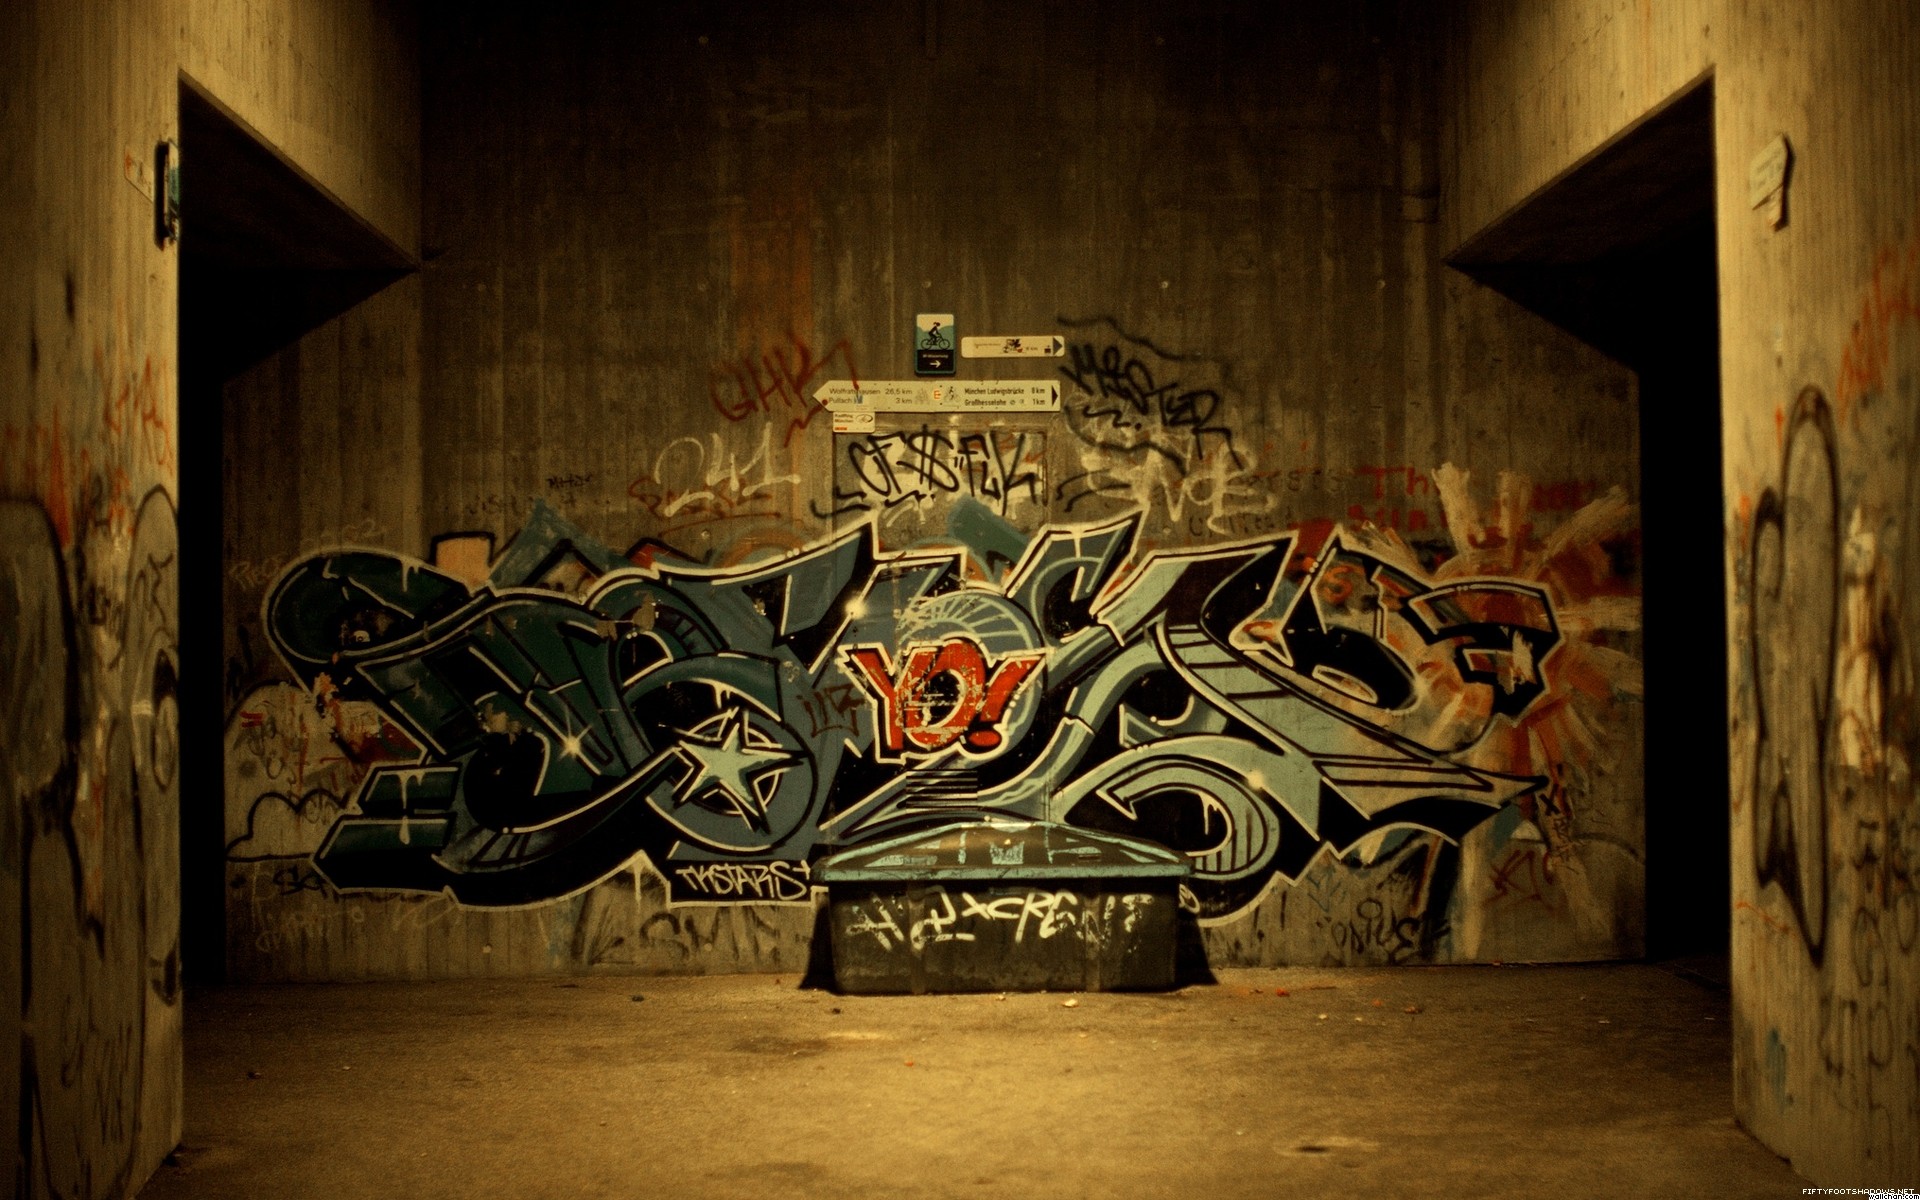 Urban graffiti photo